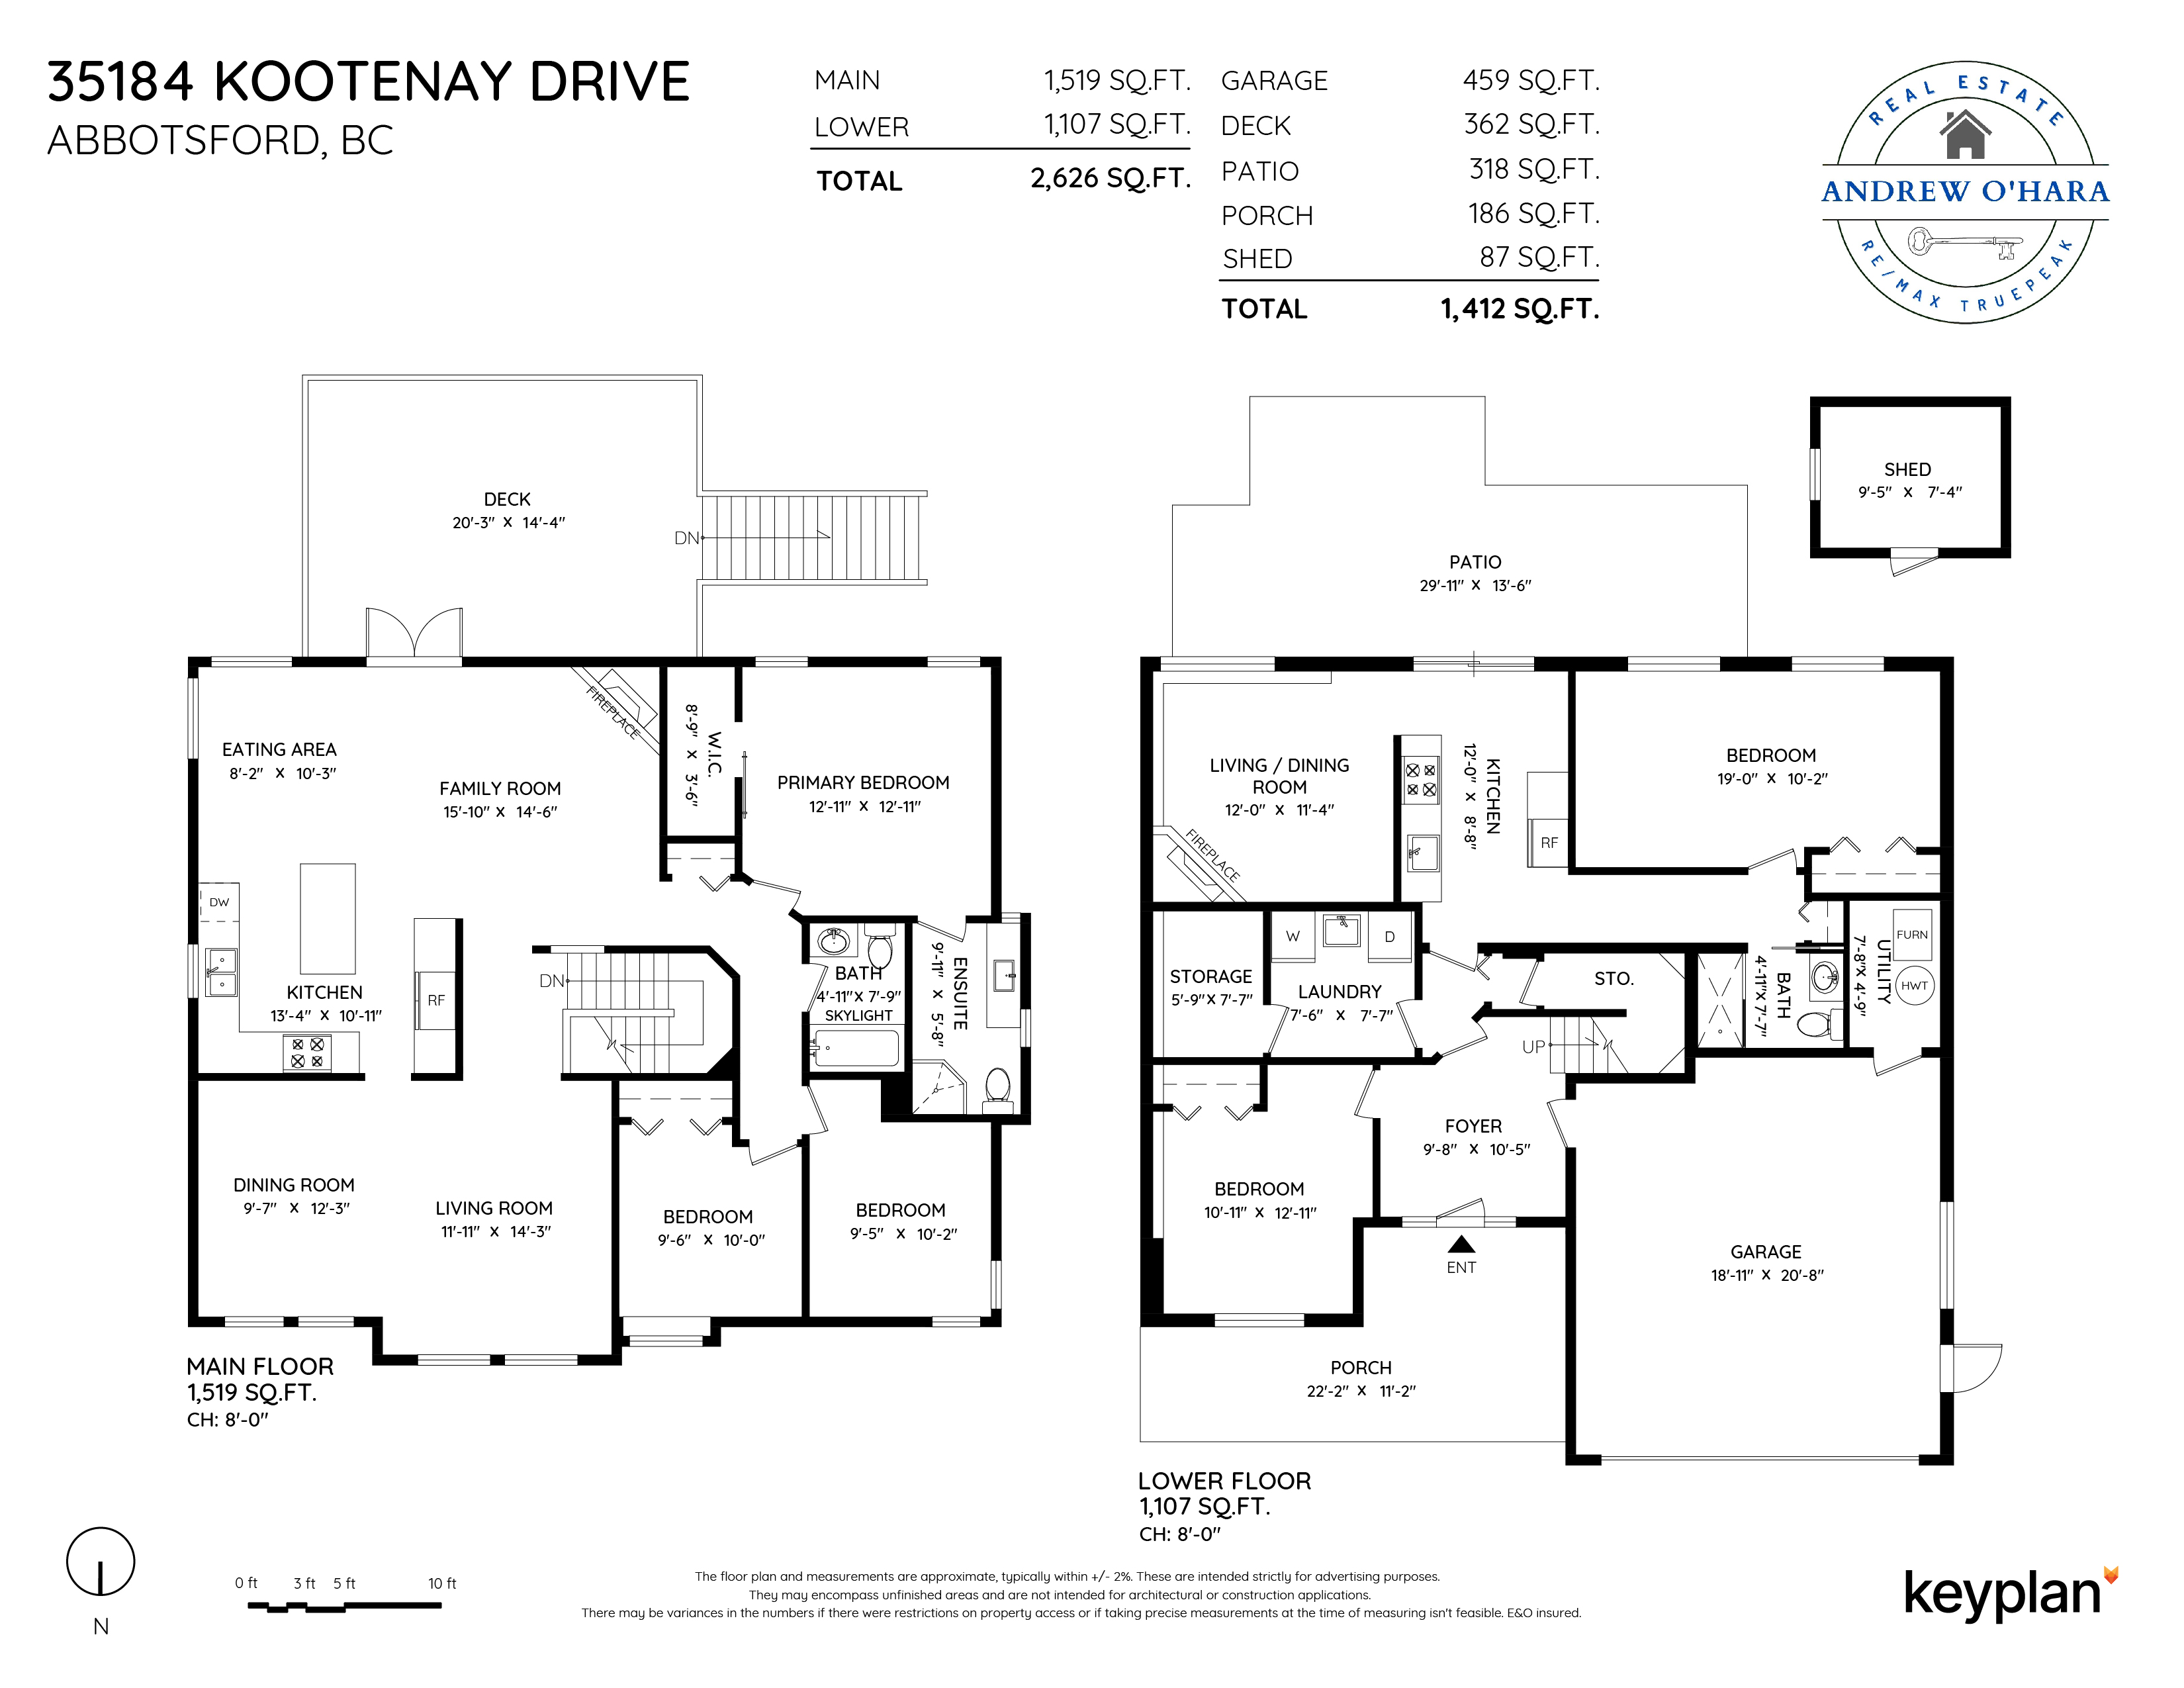 Andrew O’Hara - 35184 Kootenay Drive, Abbotsford, BC, Canada | Floor Plan 1